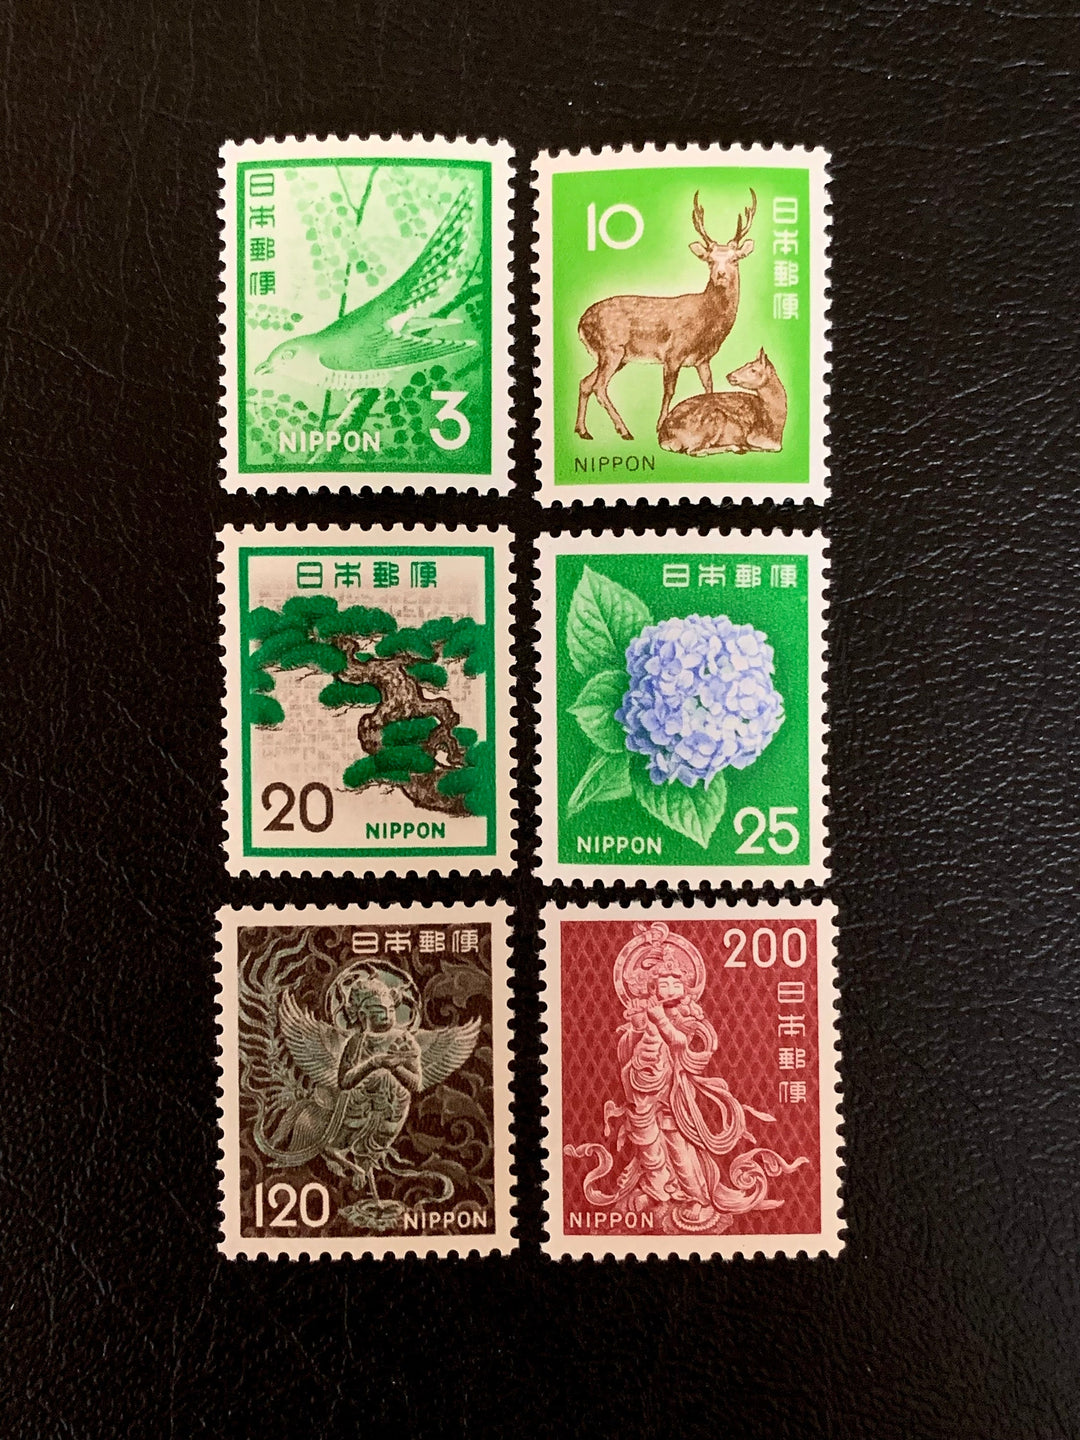 Japan - Original Vintage Postage Stamps- 1972- Fauna, Flora & Culture - for the collector, artist or crafter